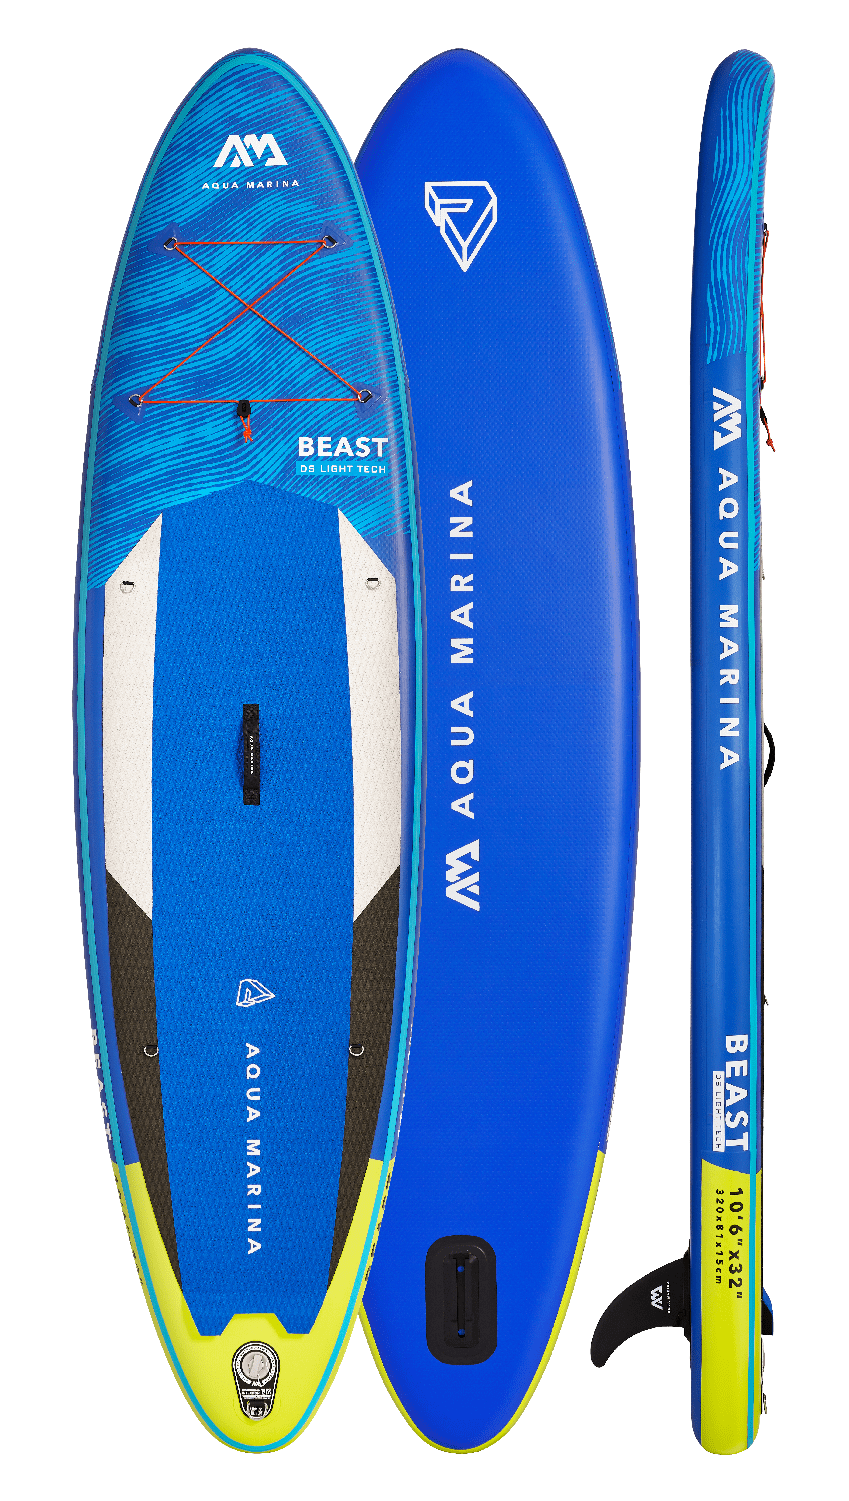 Aqua Marina Beast Inflatable SUP